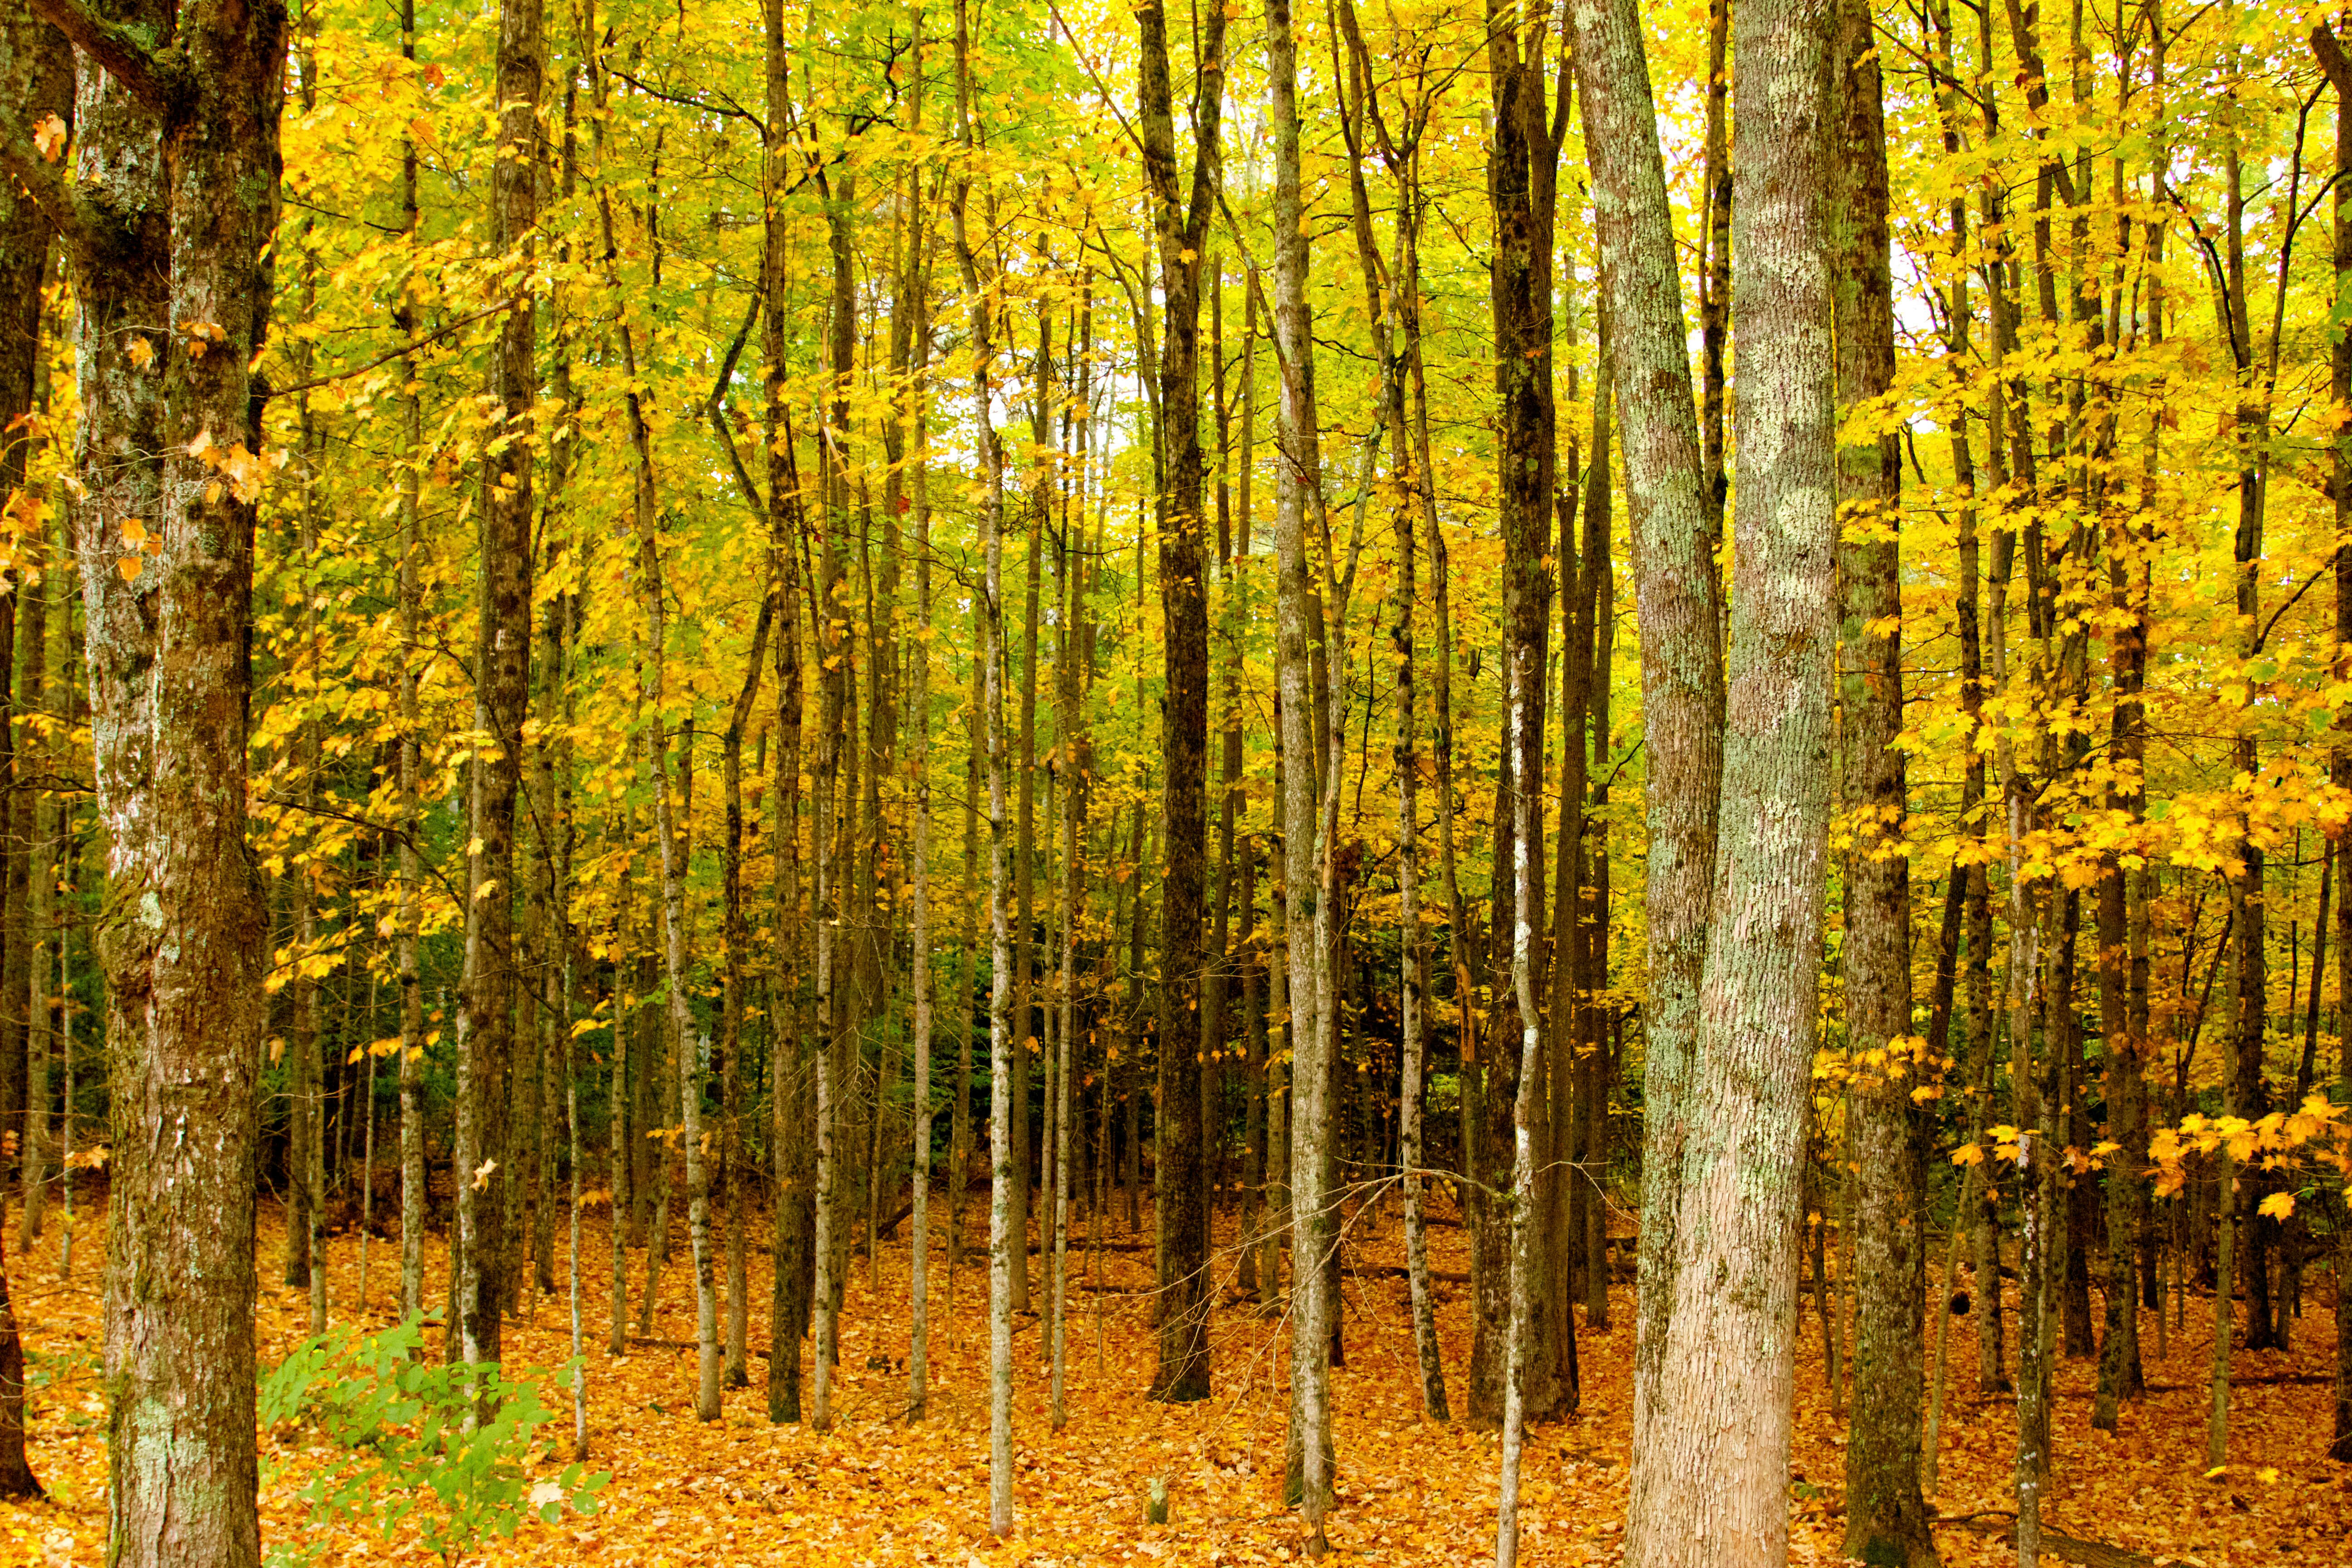 New England Fall Forest. (Photo courtesy of Houston Methodist Hospital)